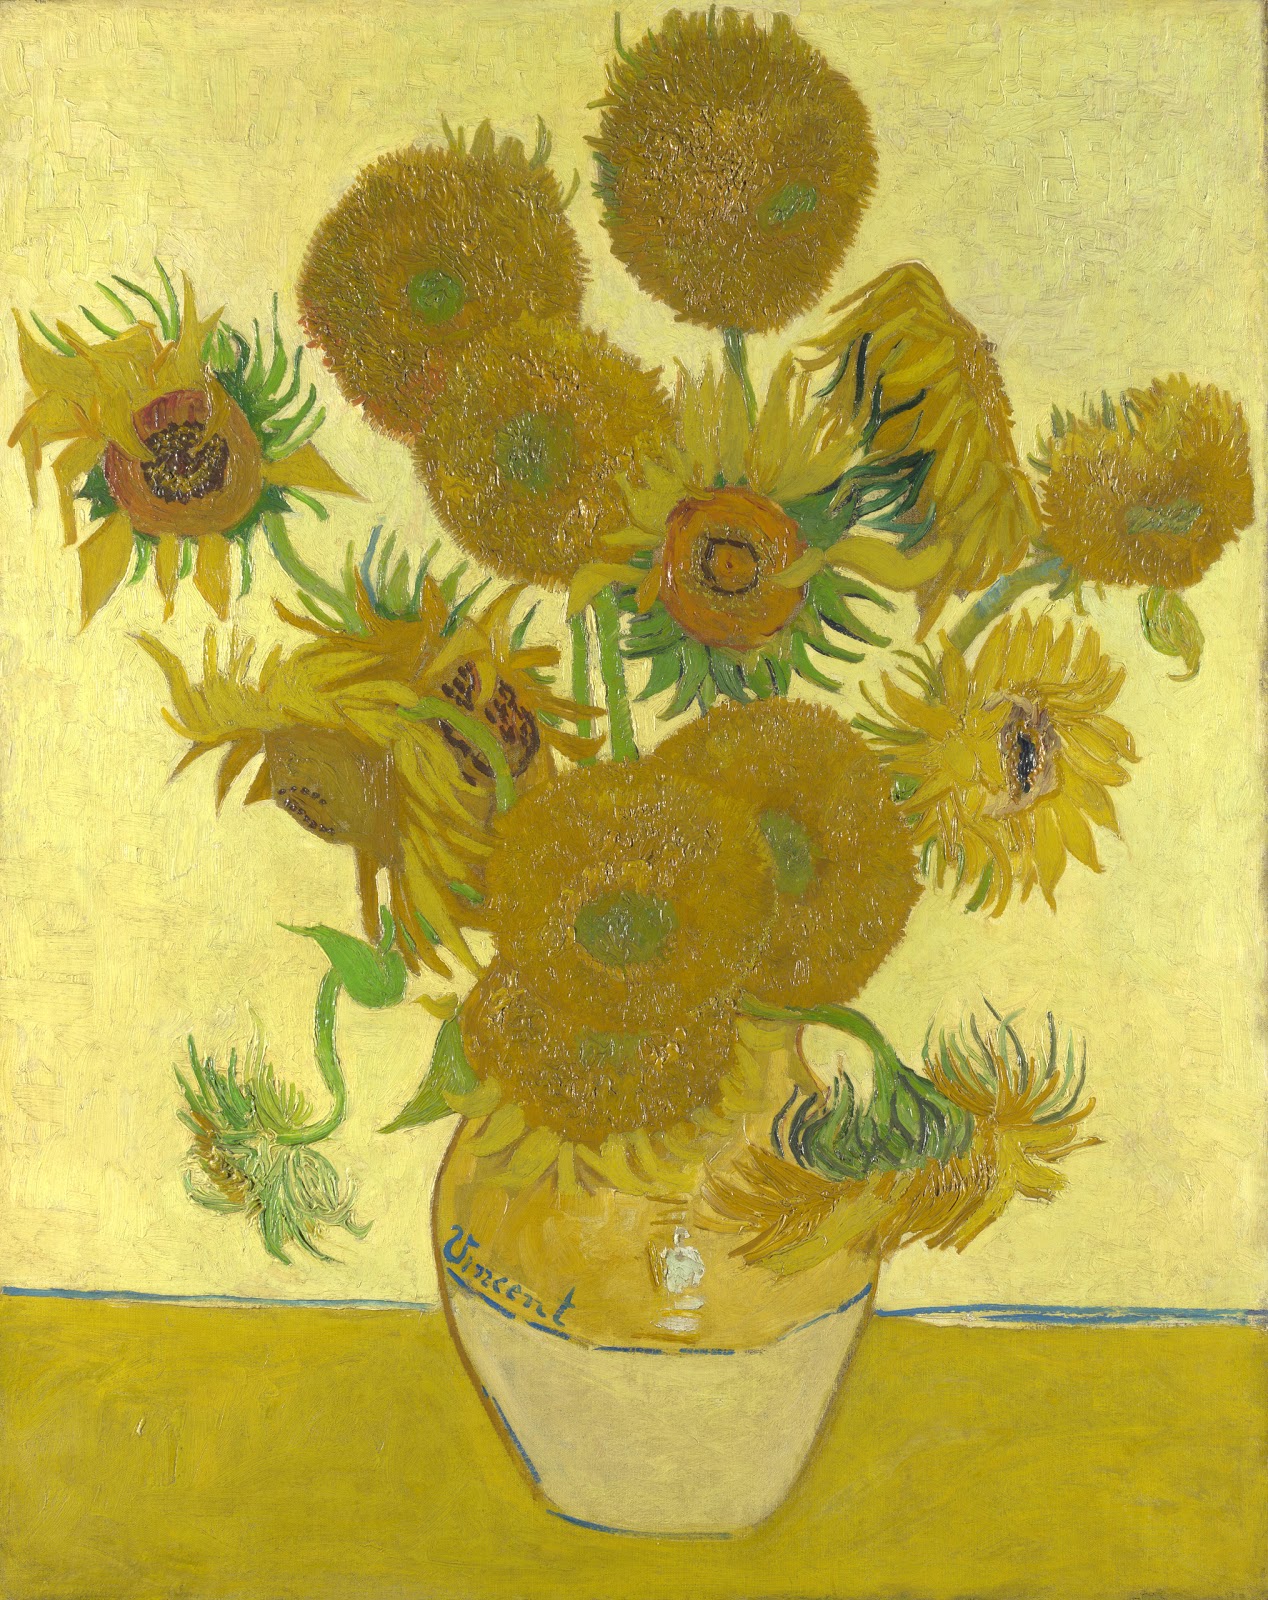 Vincent+Van+Gogh-1853-1890 (521).jpg